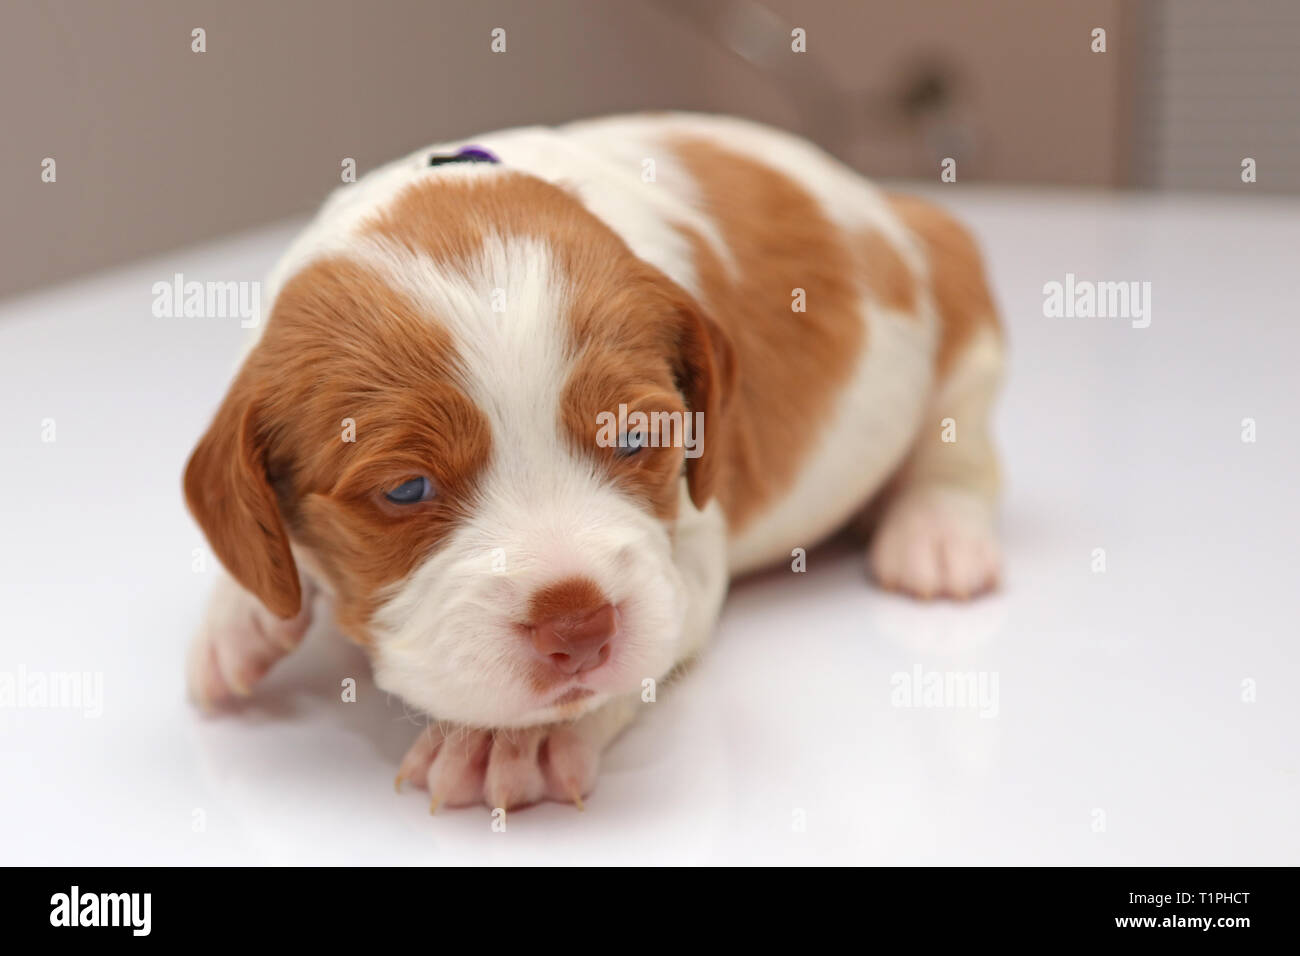 Bretaña cachorro español fotografías e imágenes de alta resolución - Alamy